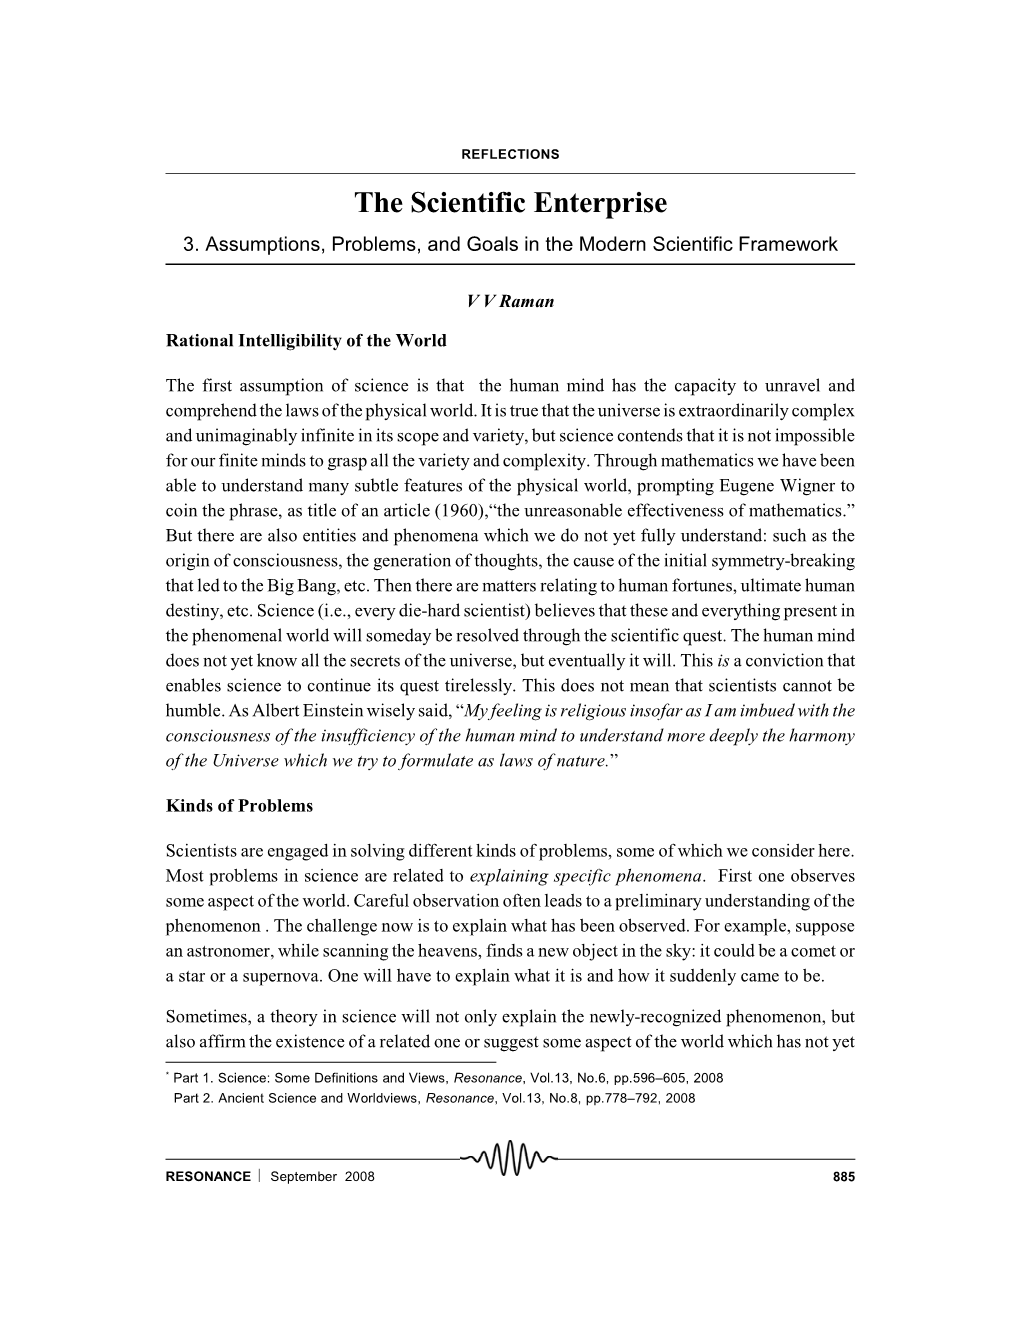 The Scientific Enterprise 3